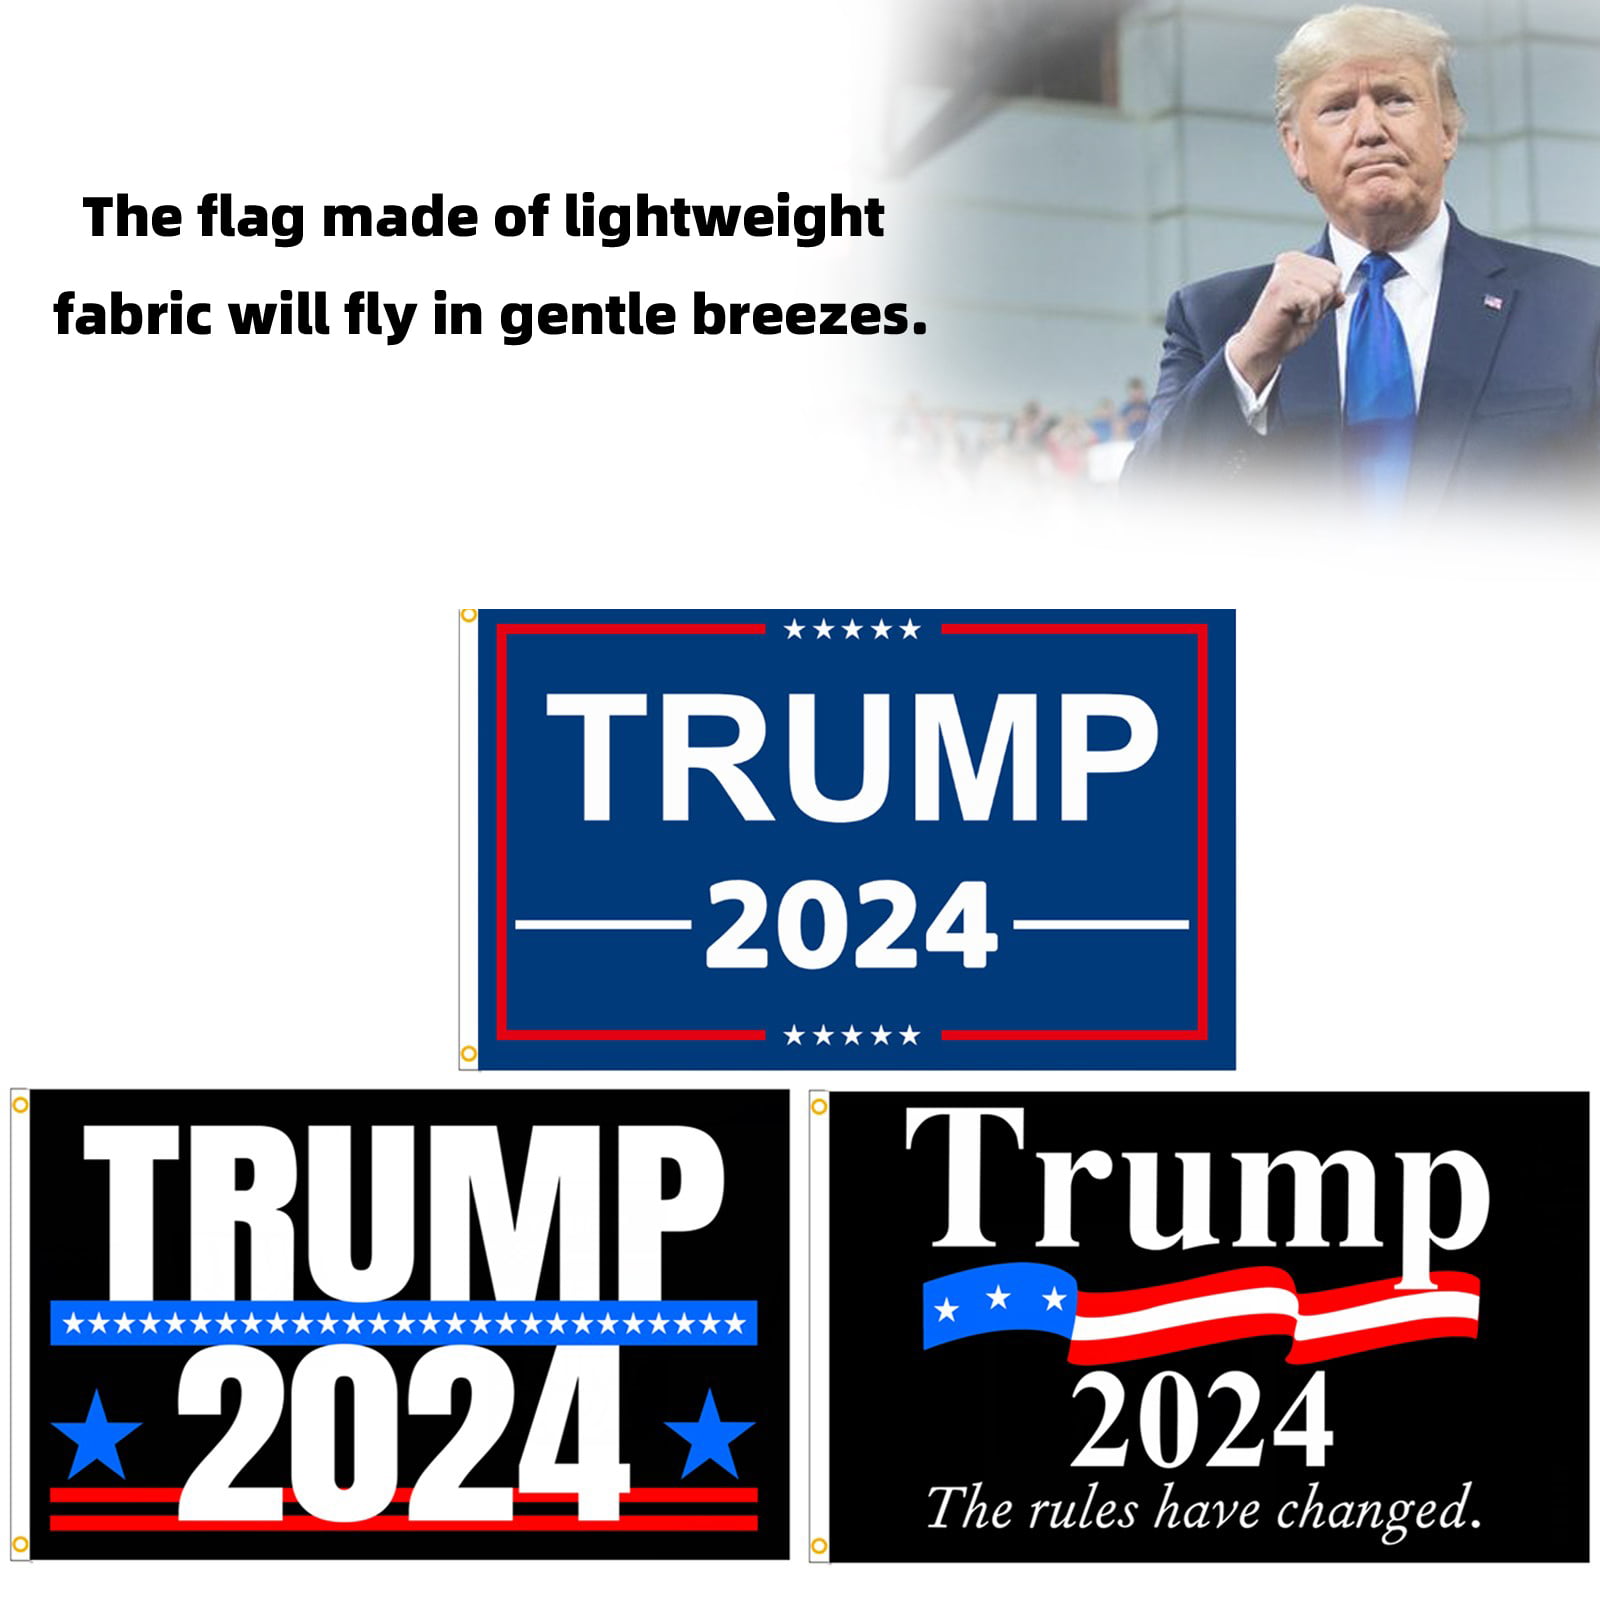 Trump 2020 President Donald trump Make America Great 3x5 Ft Flag US NEW 